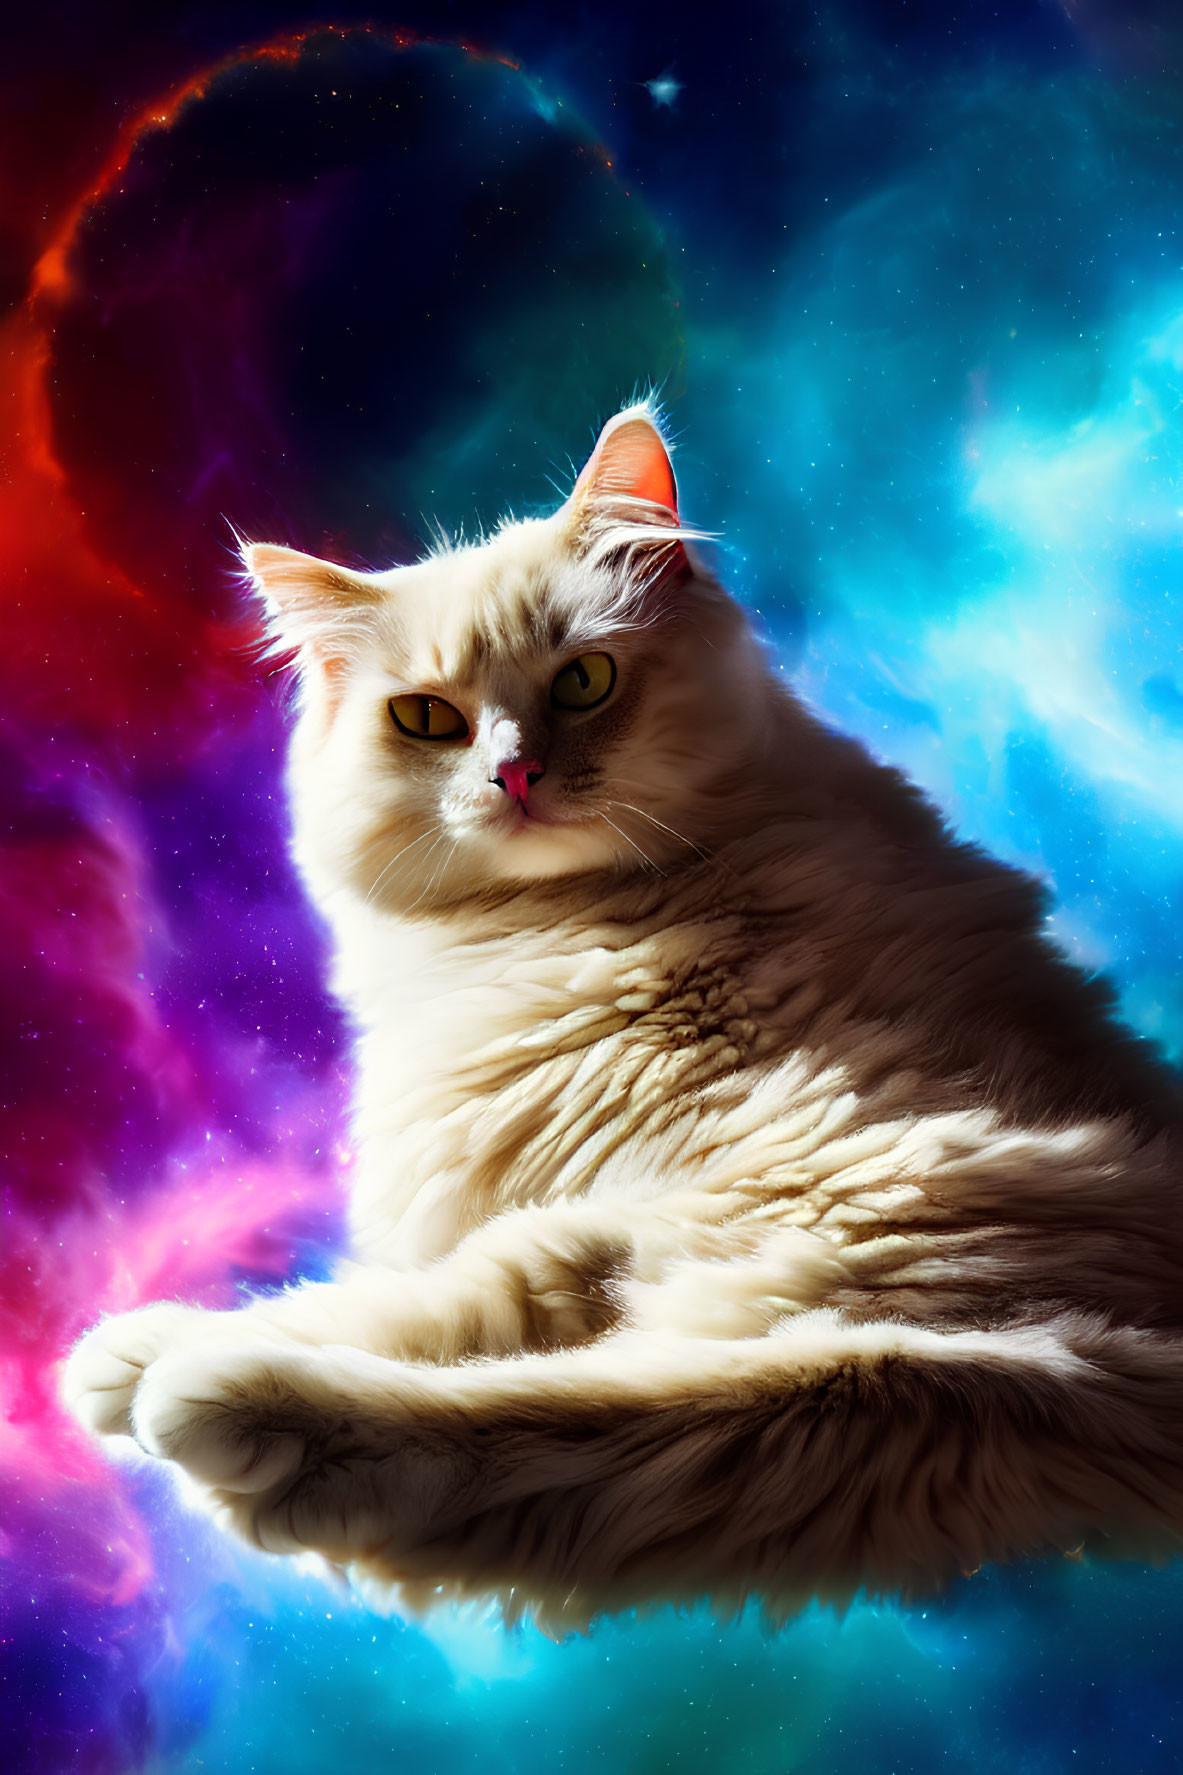 White Fluffy Cat on Cosmic Background with Nebula